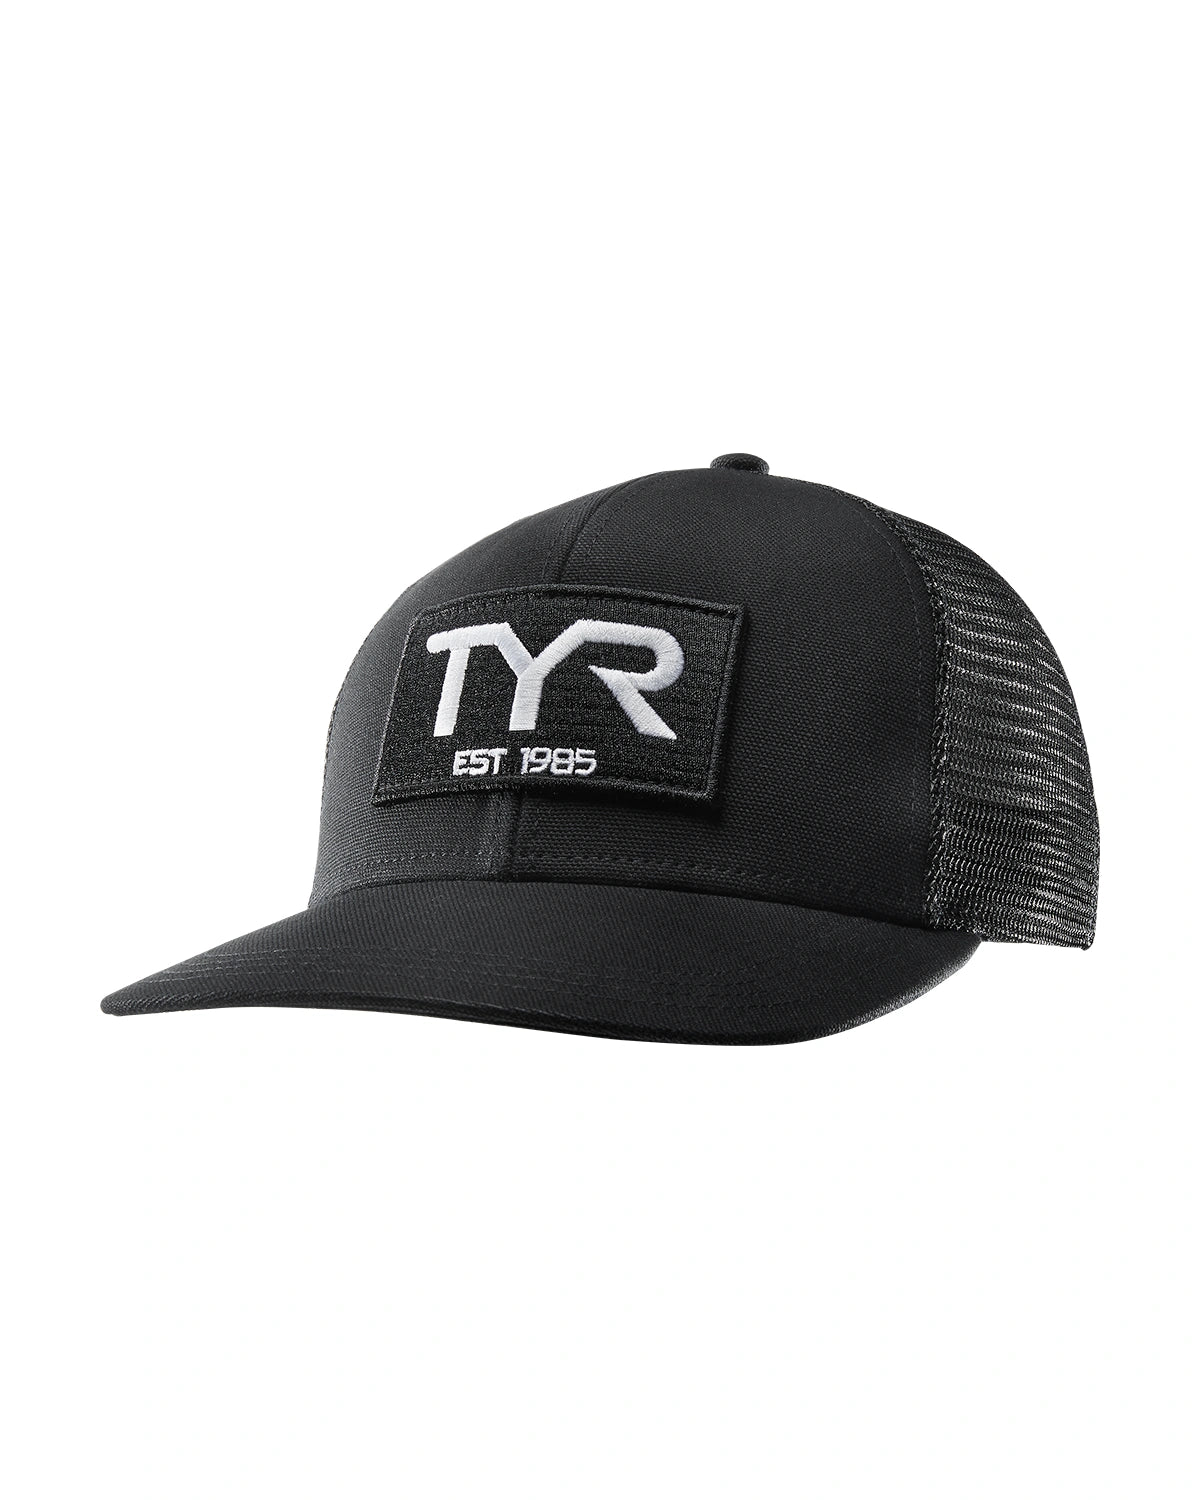 EST. TYR TRUCKER '85 HAT - SOLID / CAMOUFLAGE